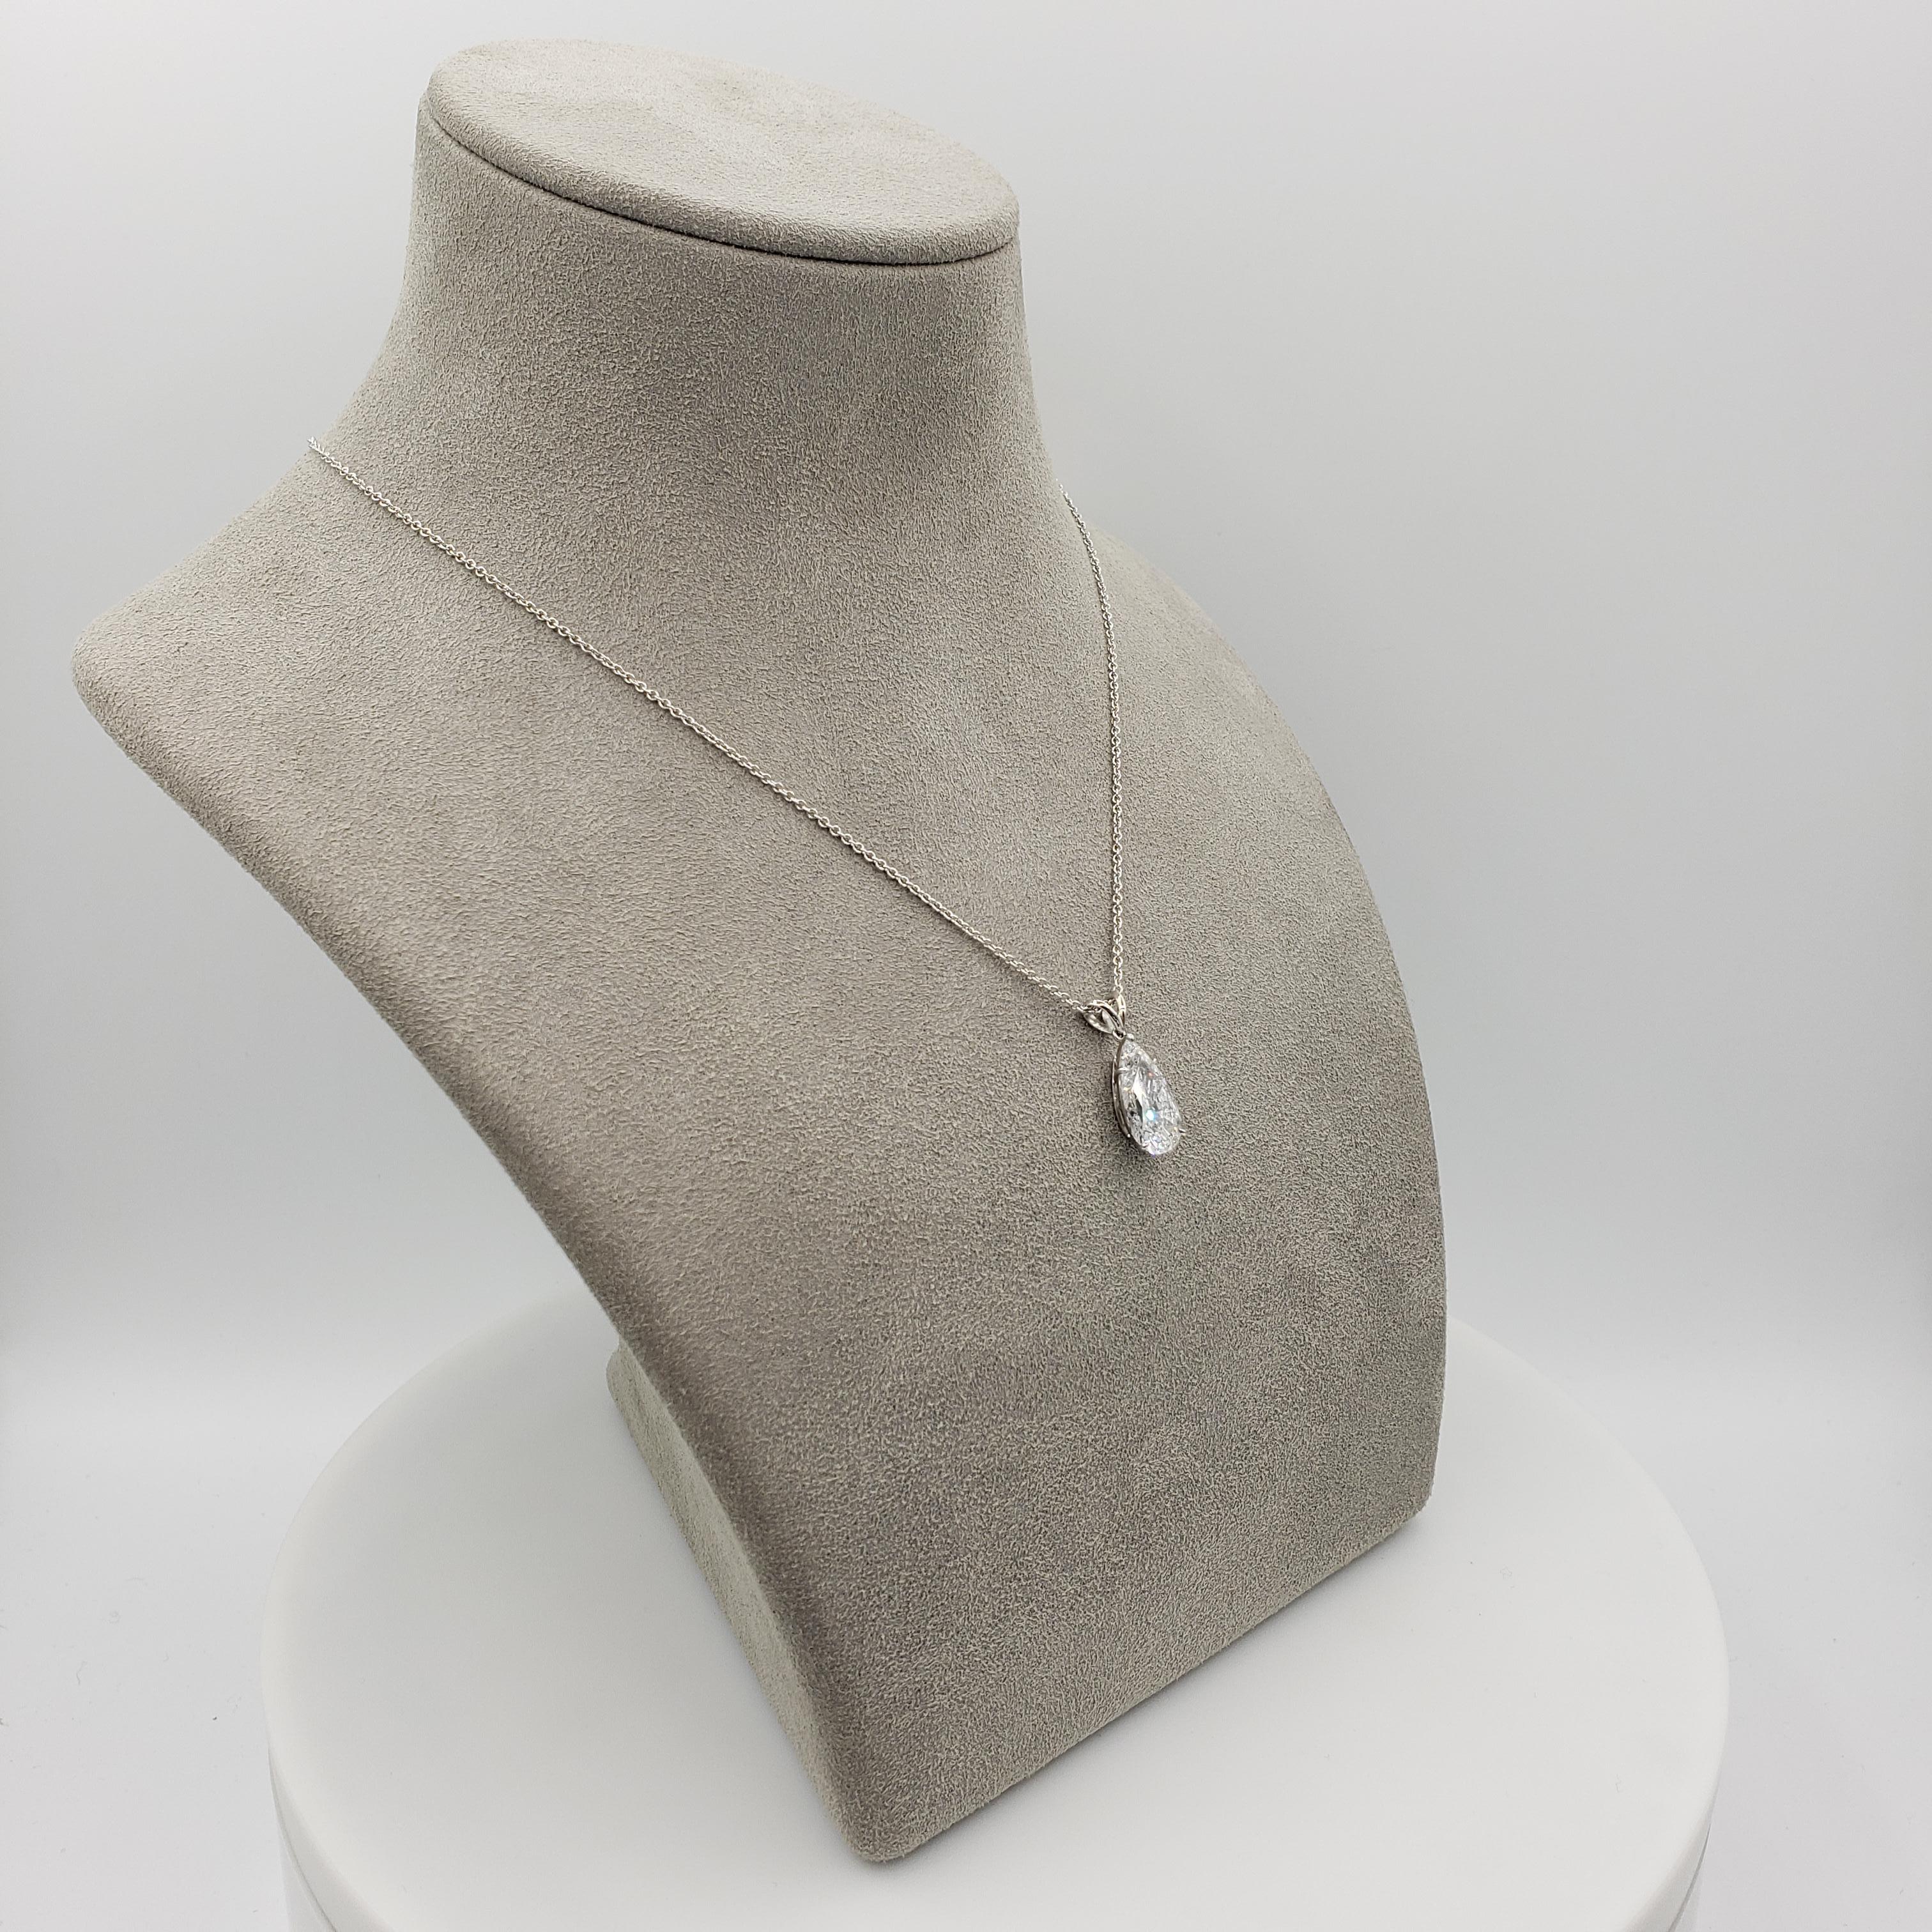 Pear Cut GIA Certified 3.01 Carat Pear Shape Diamond Solitaire Pendant Necklace